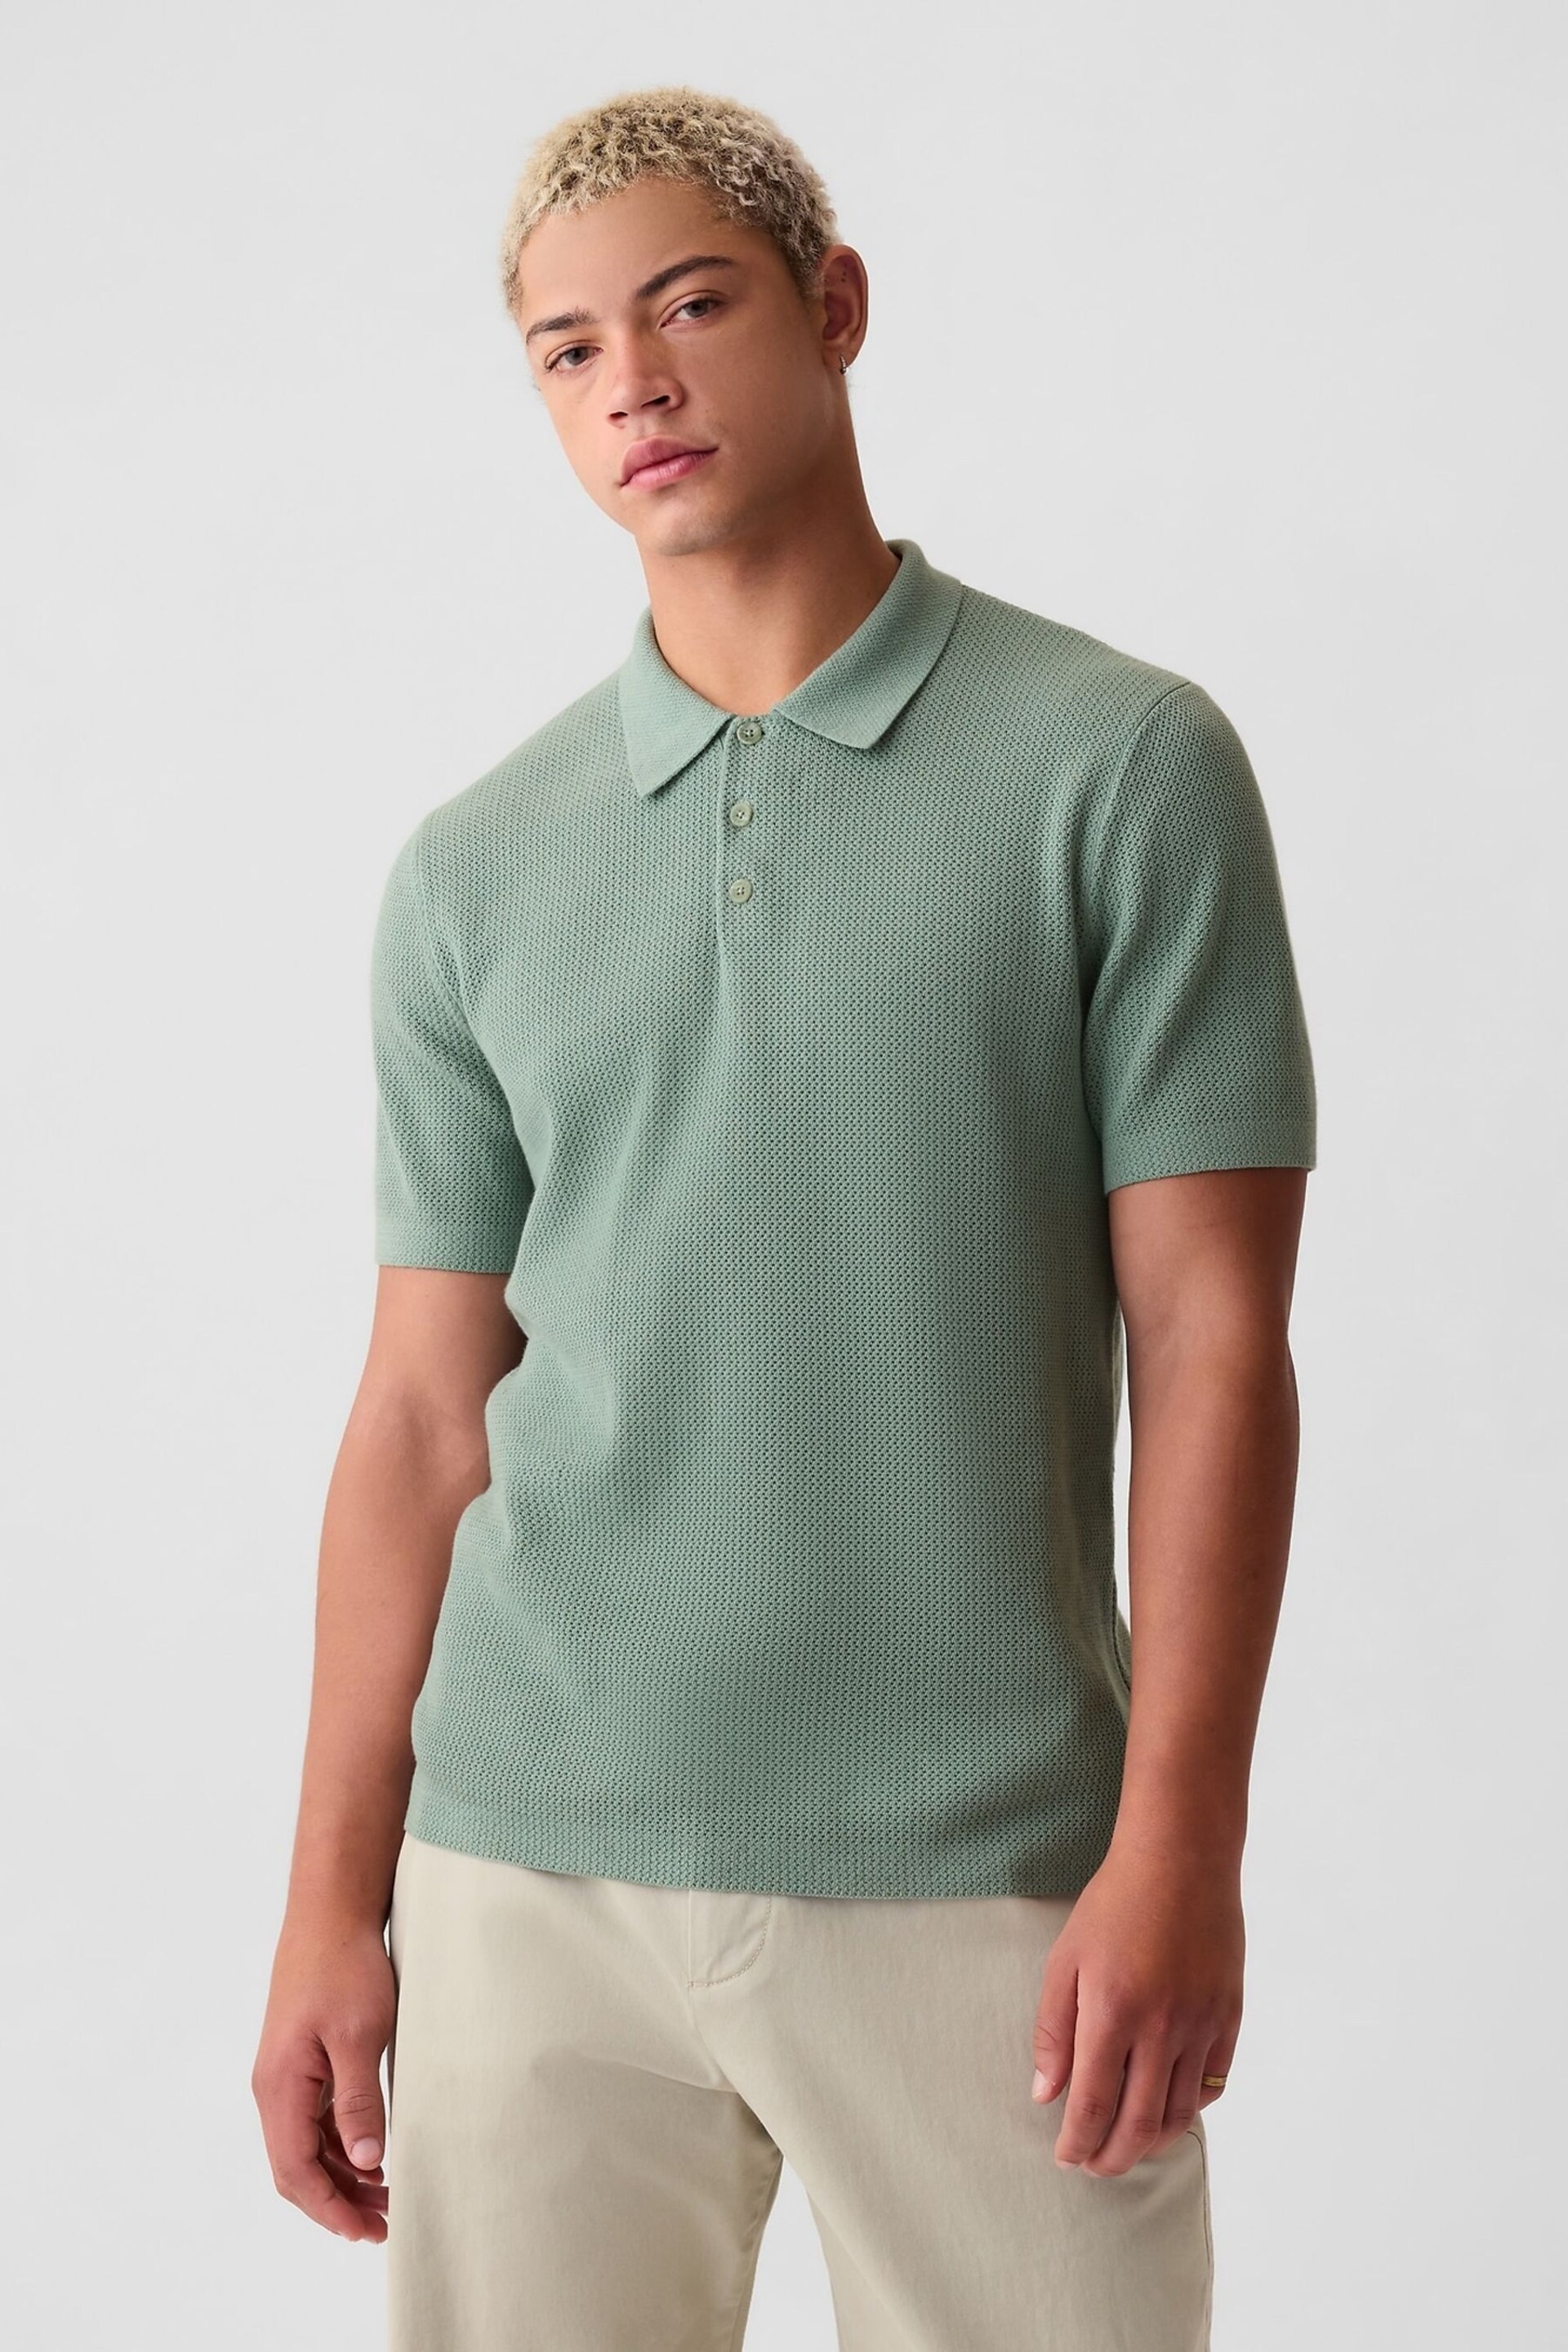 Gap Green Cotton Textured Short Sleeve Polo Shirt - Image 1 of 4